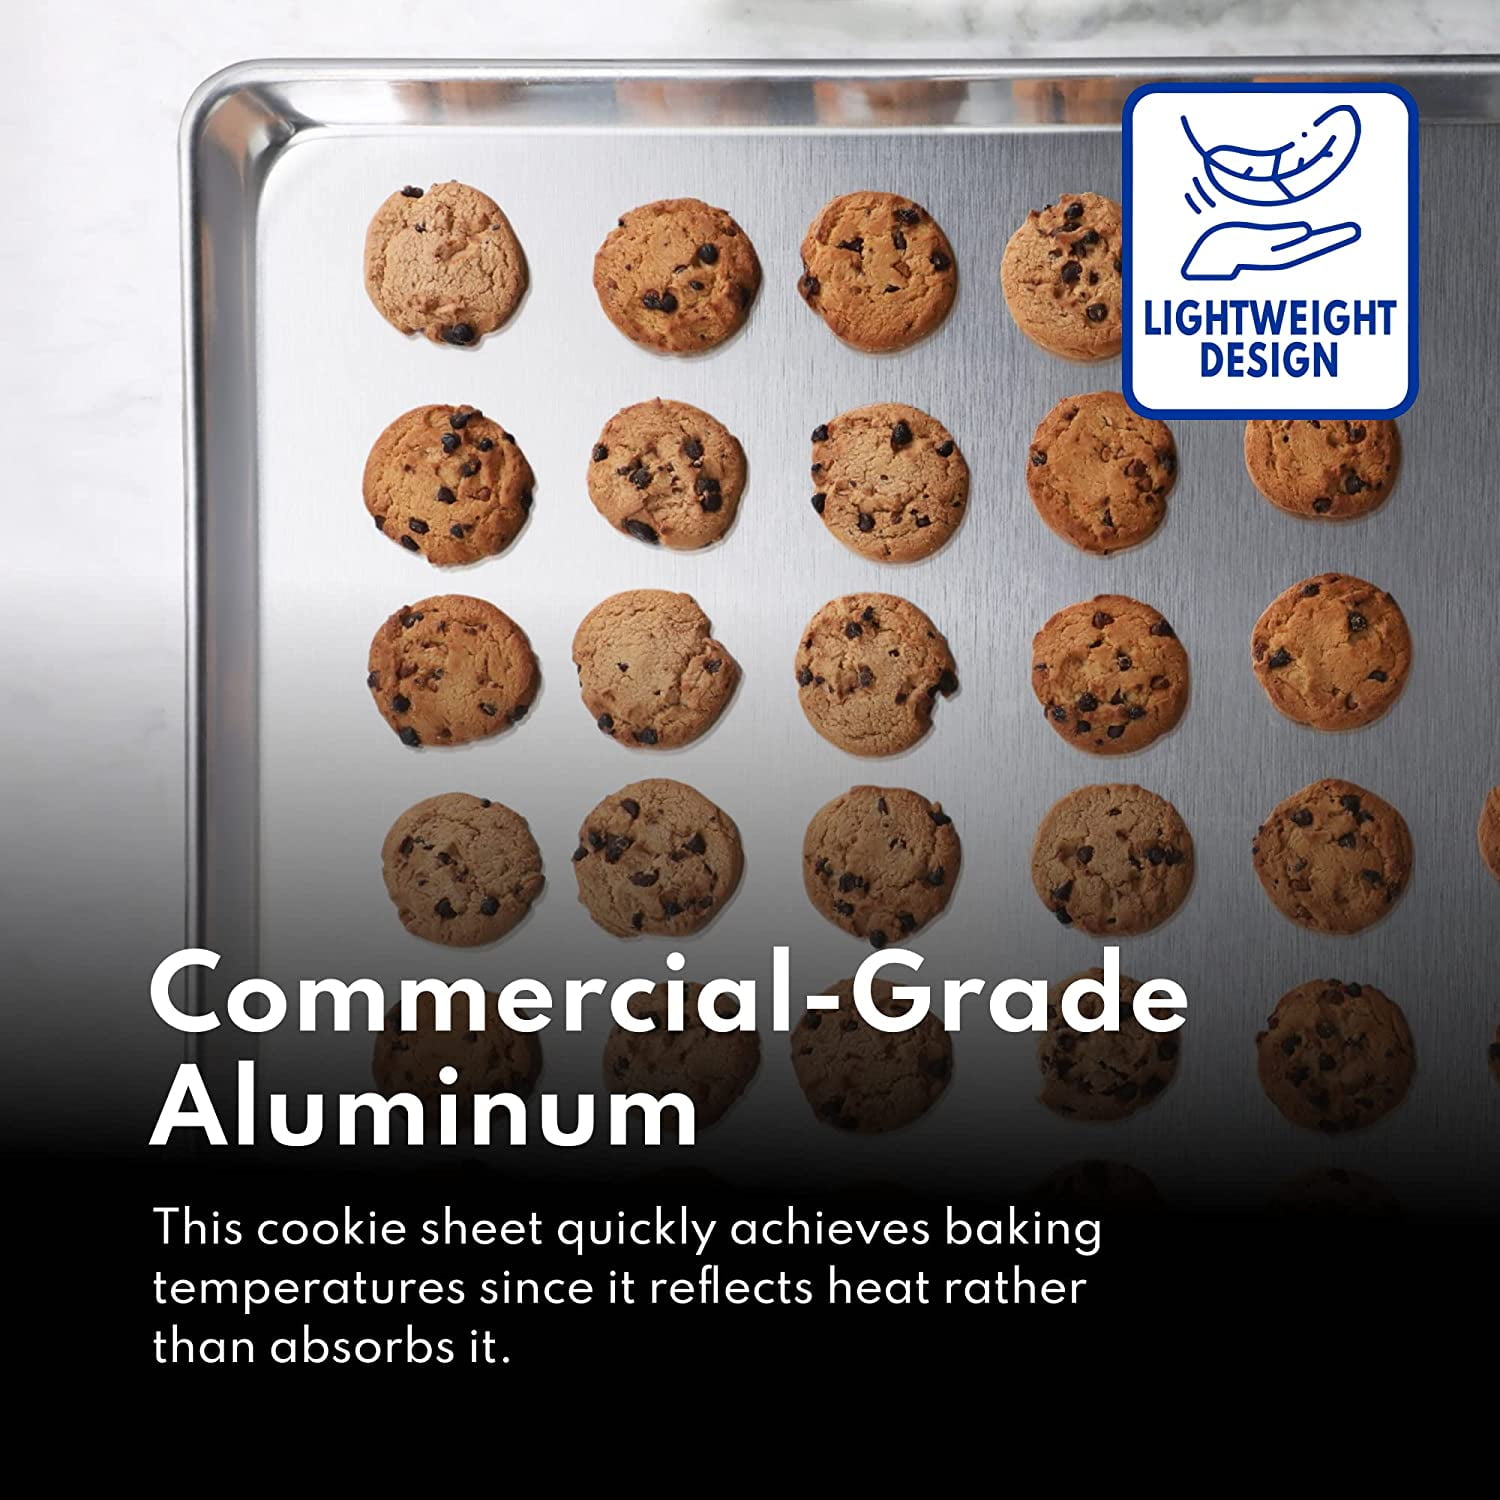 New Star Foodservice 36749 Commercial-Grade 16-Gauge Aluminum Sheet Pan/Bun  Pan, 18 L x 26 W x 1 H (Full Size)